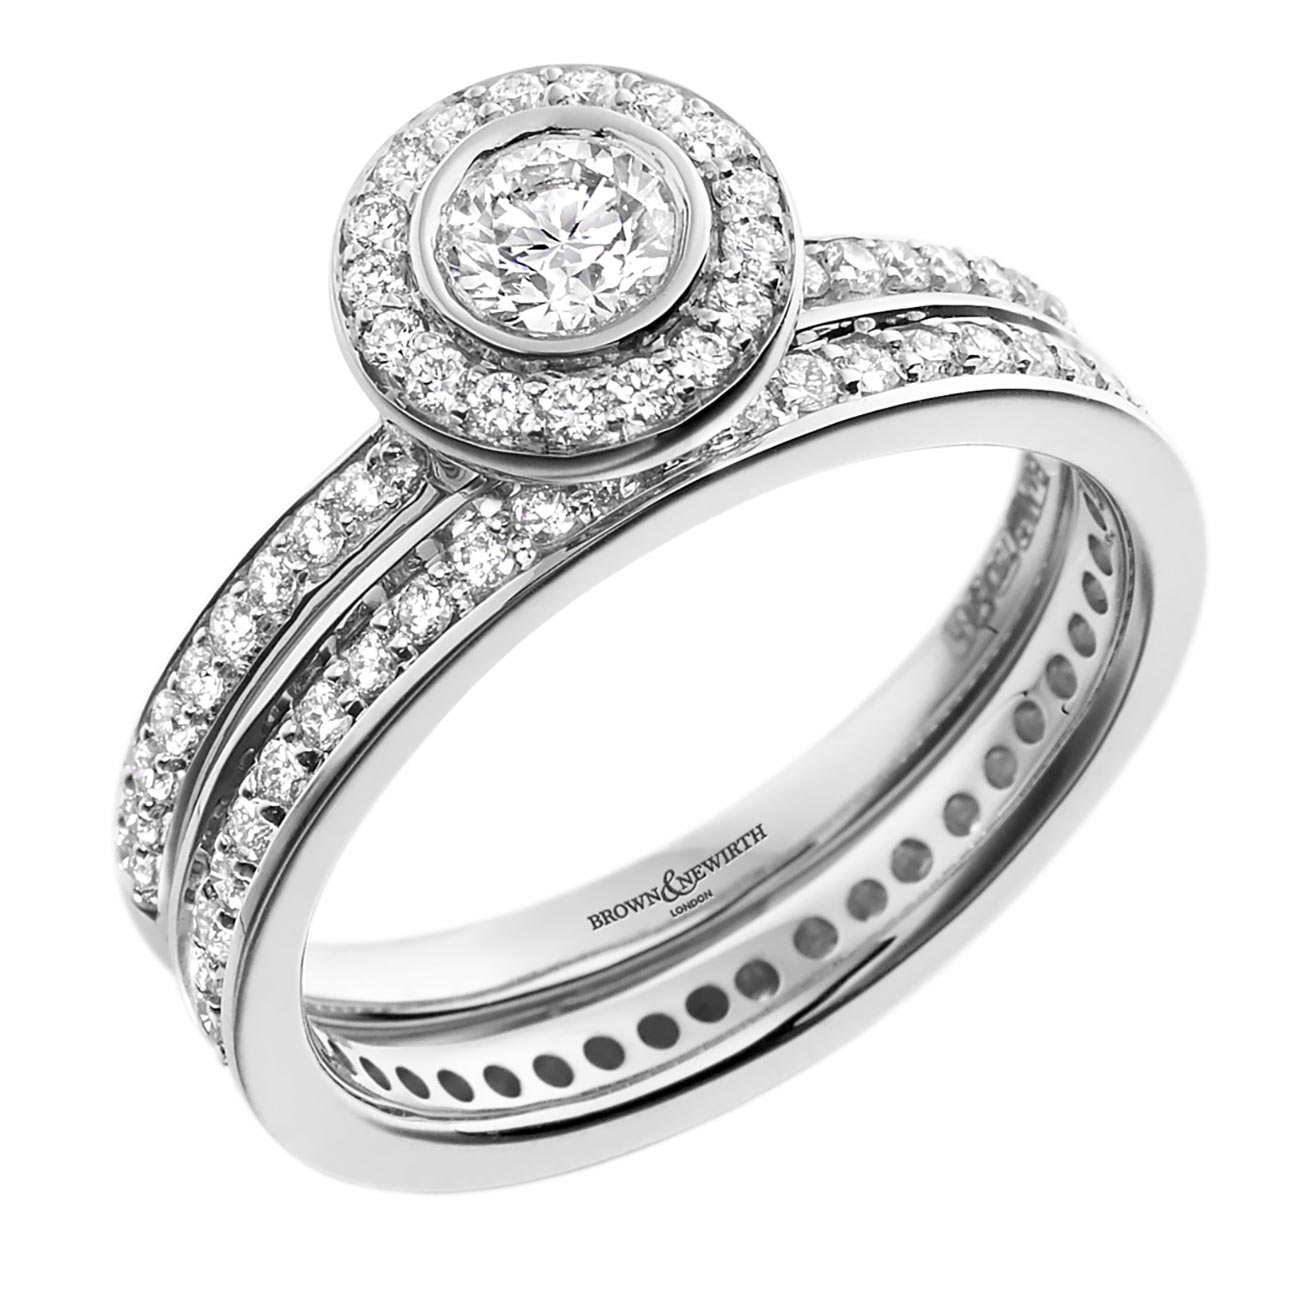 Drakes Jewellers Ring Feature Wed Wedding Cornwall Devon Bride2